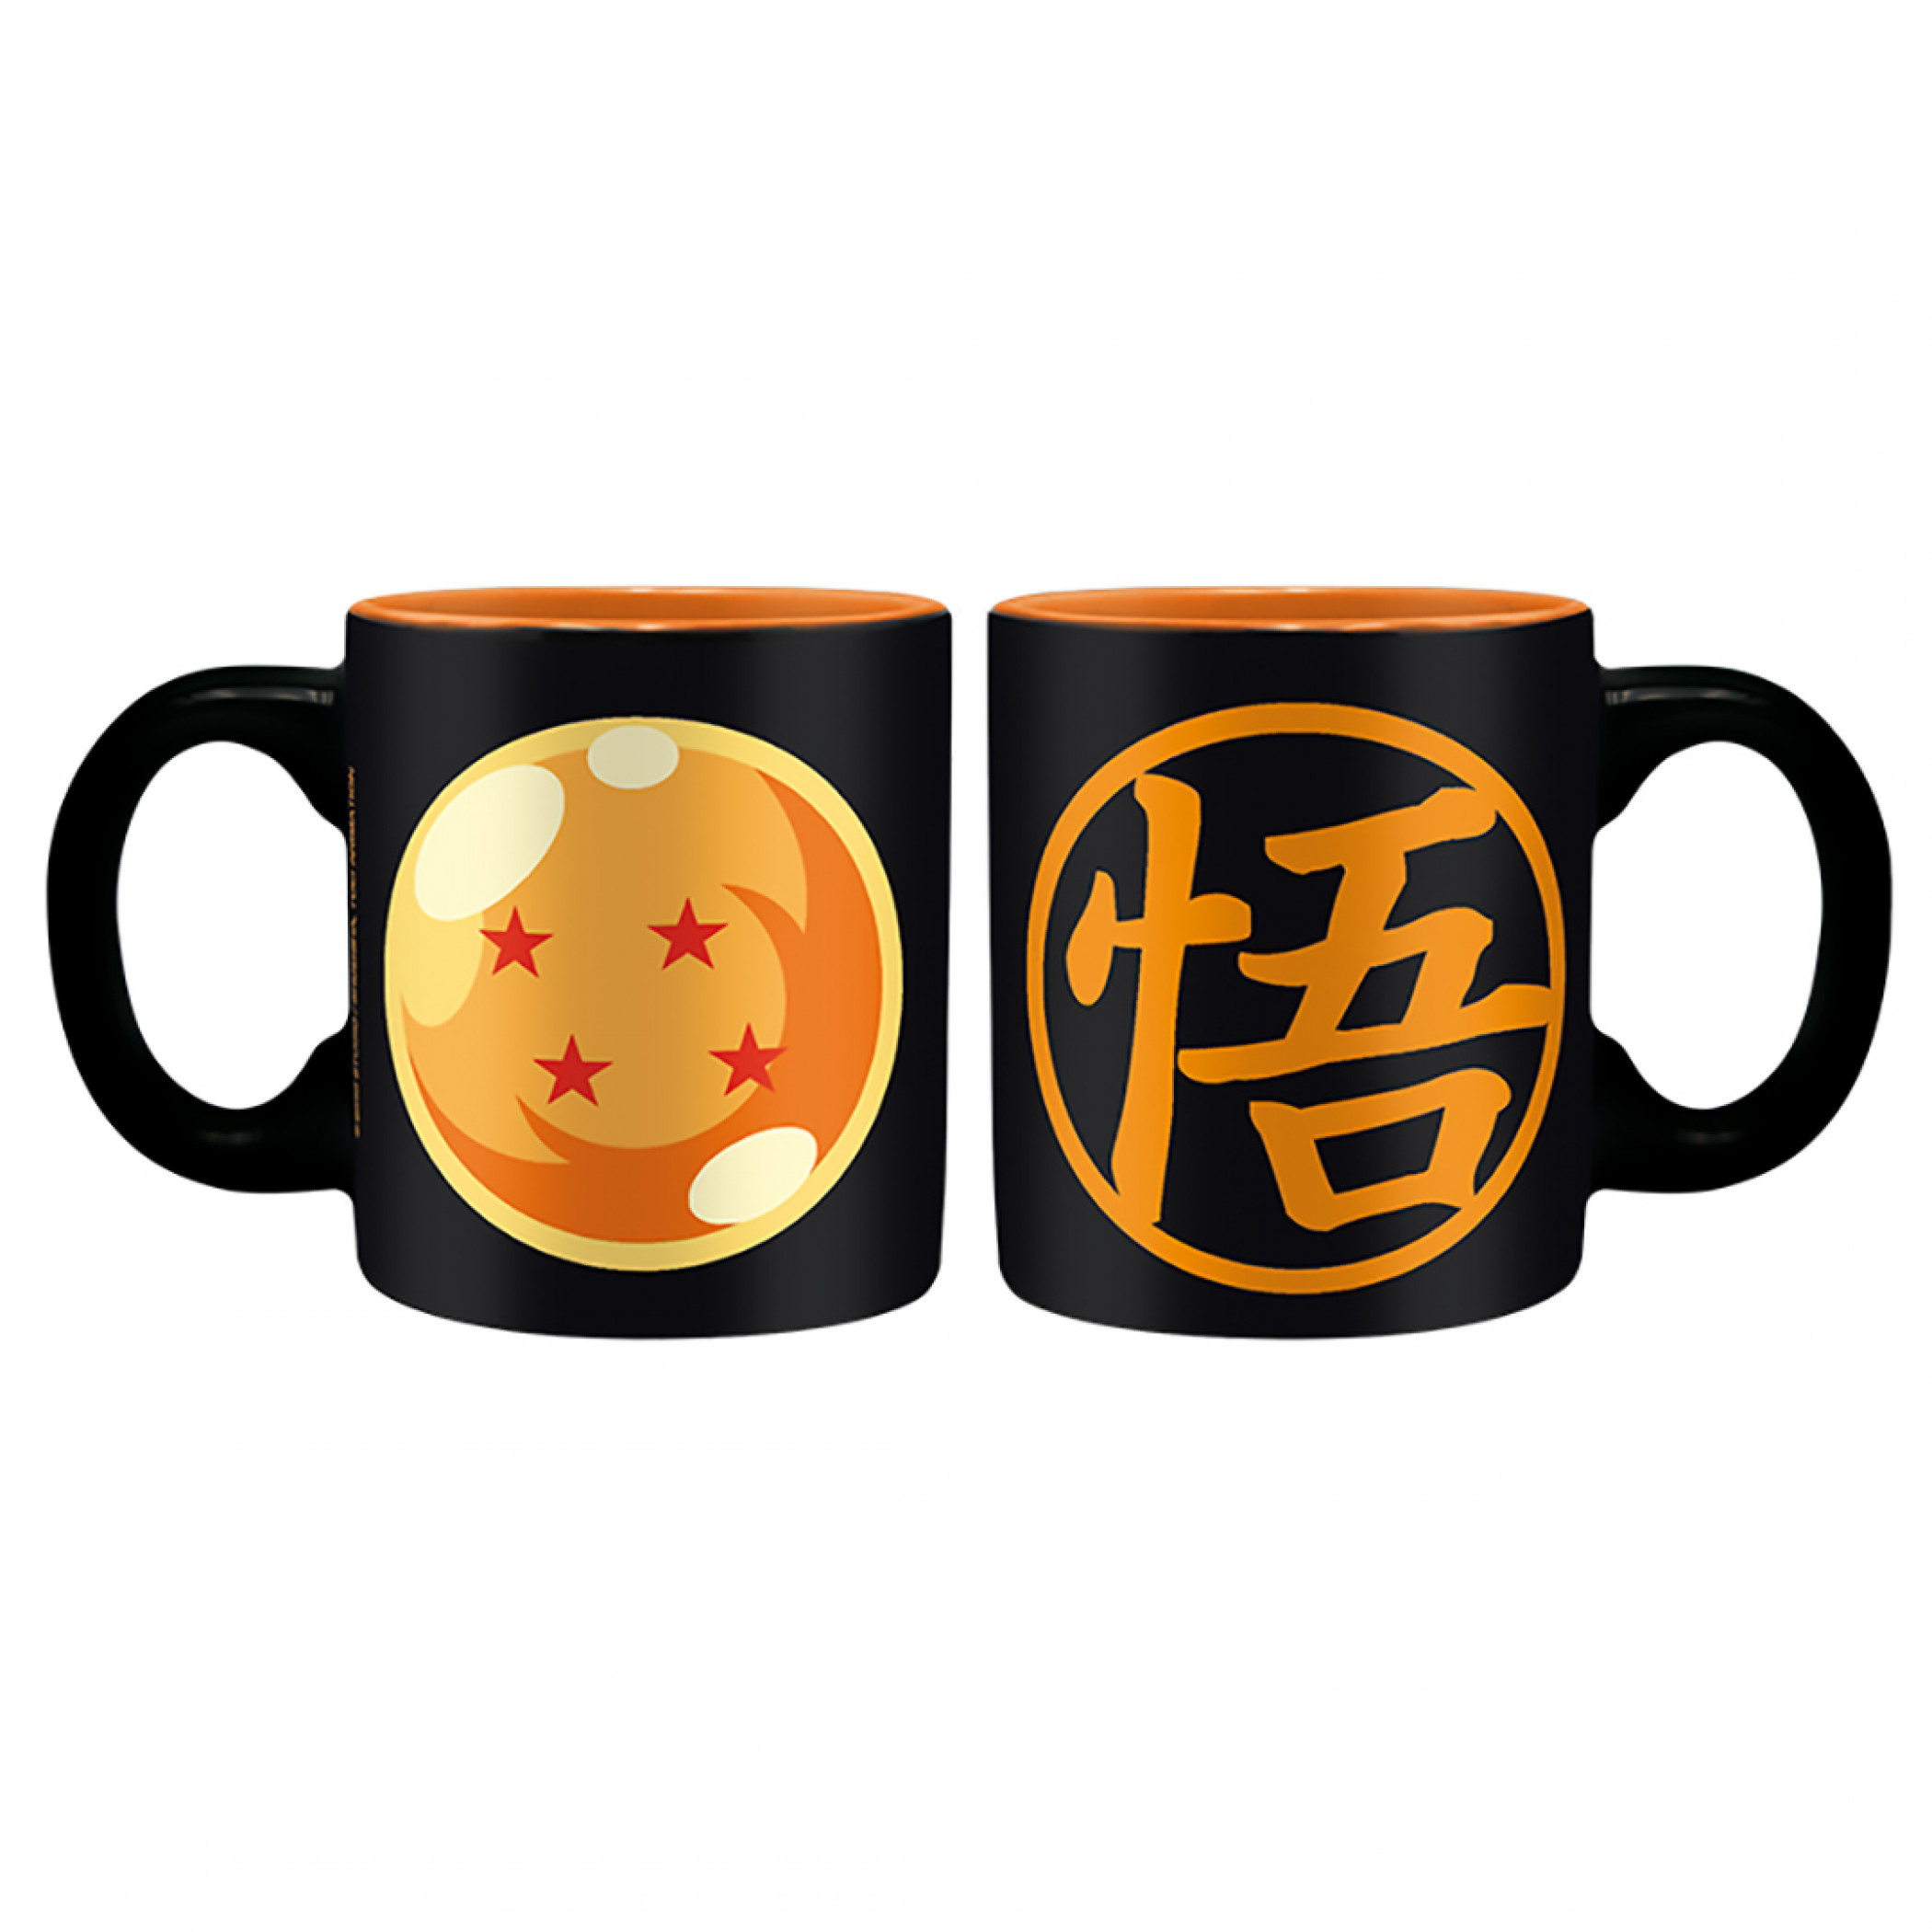 Dragon Ball Z Drink Set - Shot Glass, Drinking Glass & Coffee Mug